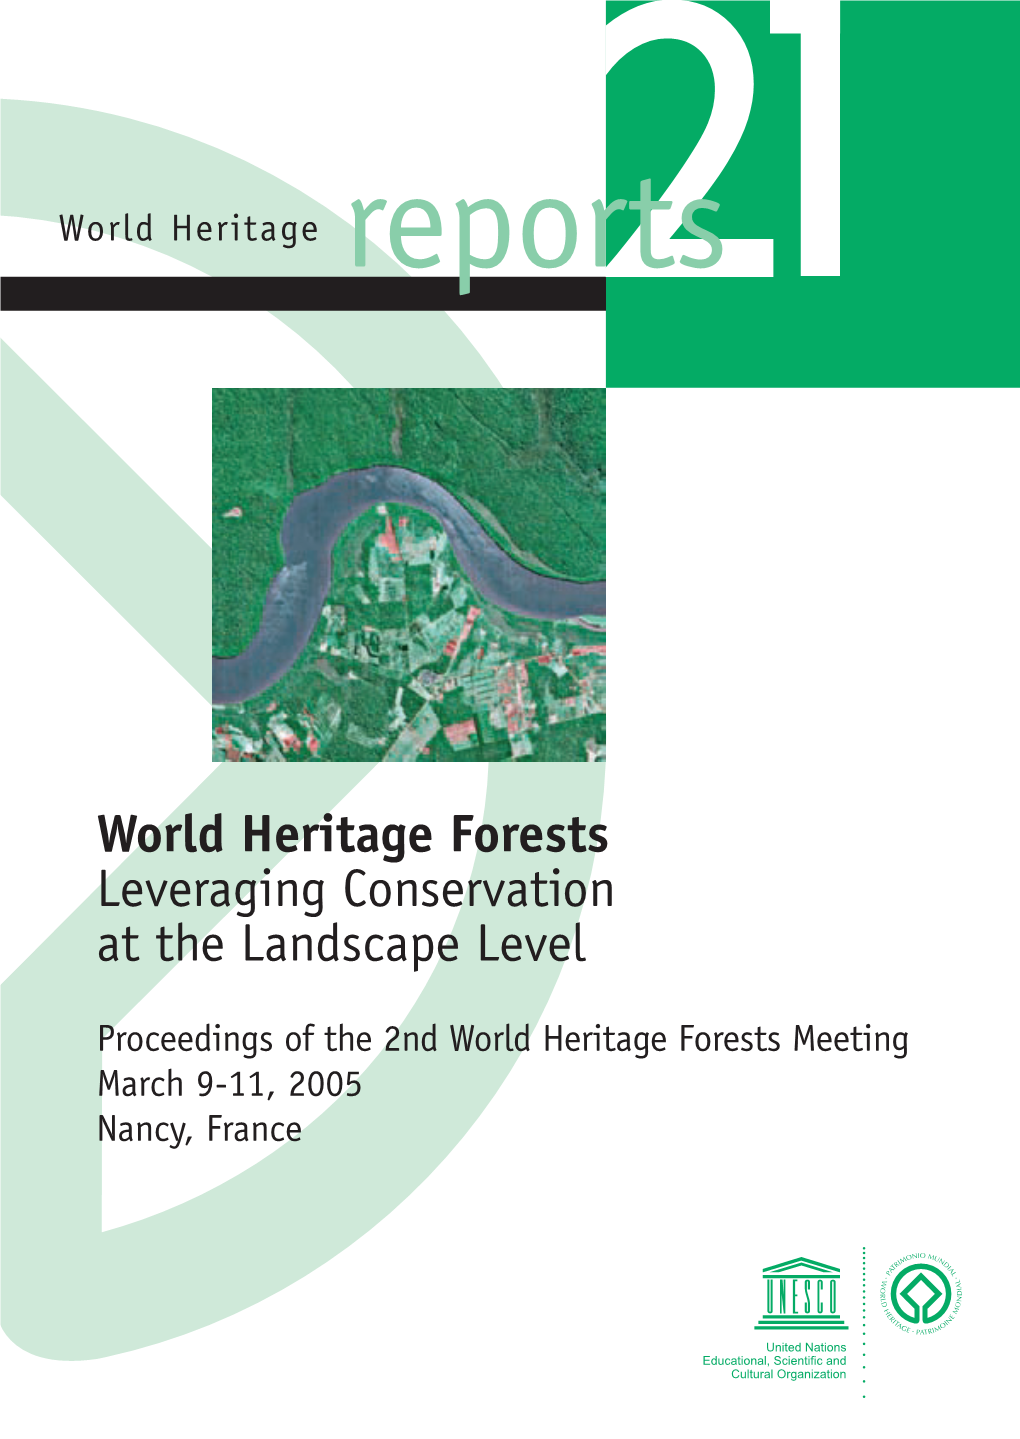 World Heritage Forests Leveraging Conservation at the Landscape Level